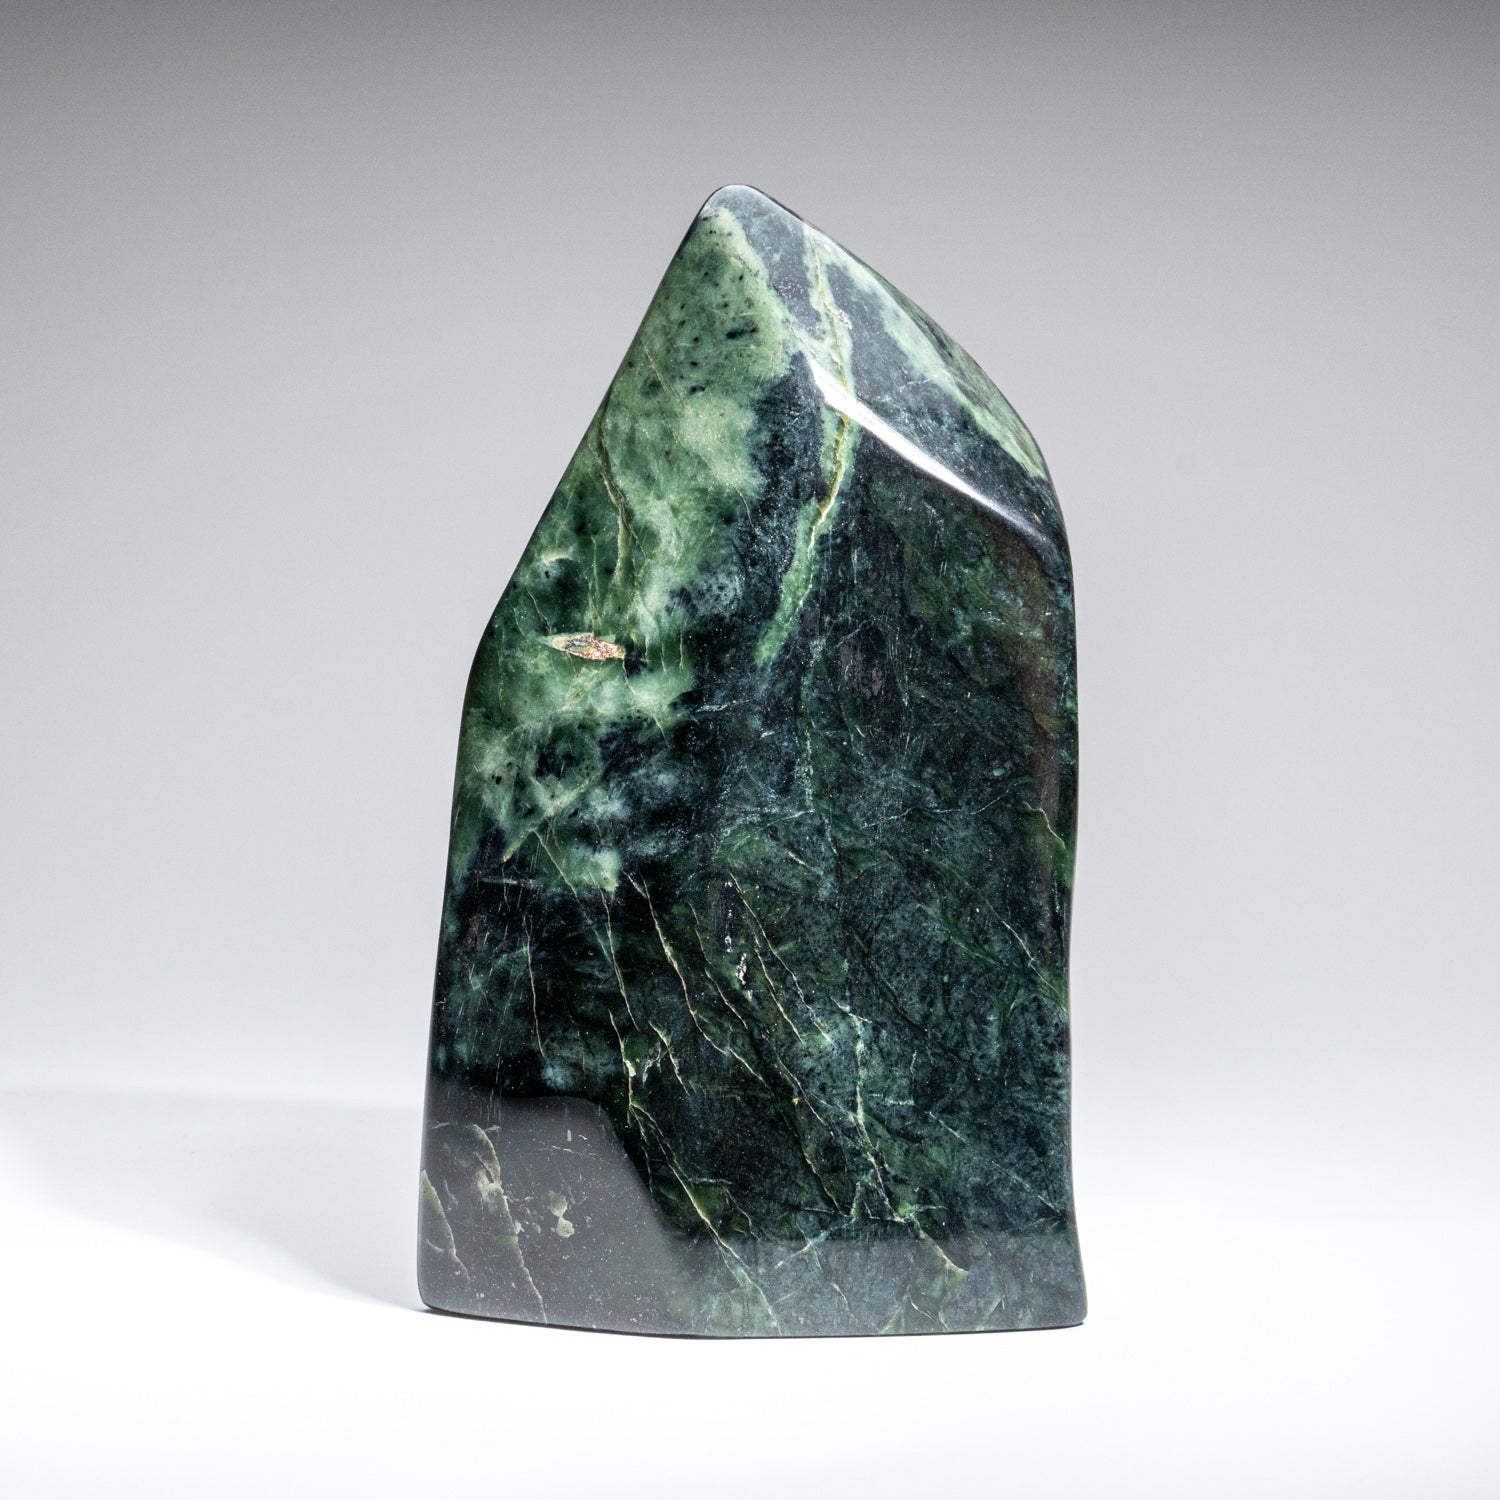 Polished Nephrite Jade Freeform from Pakistan (3.3 lbs)